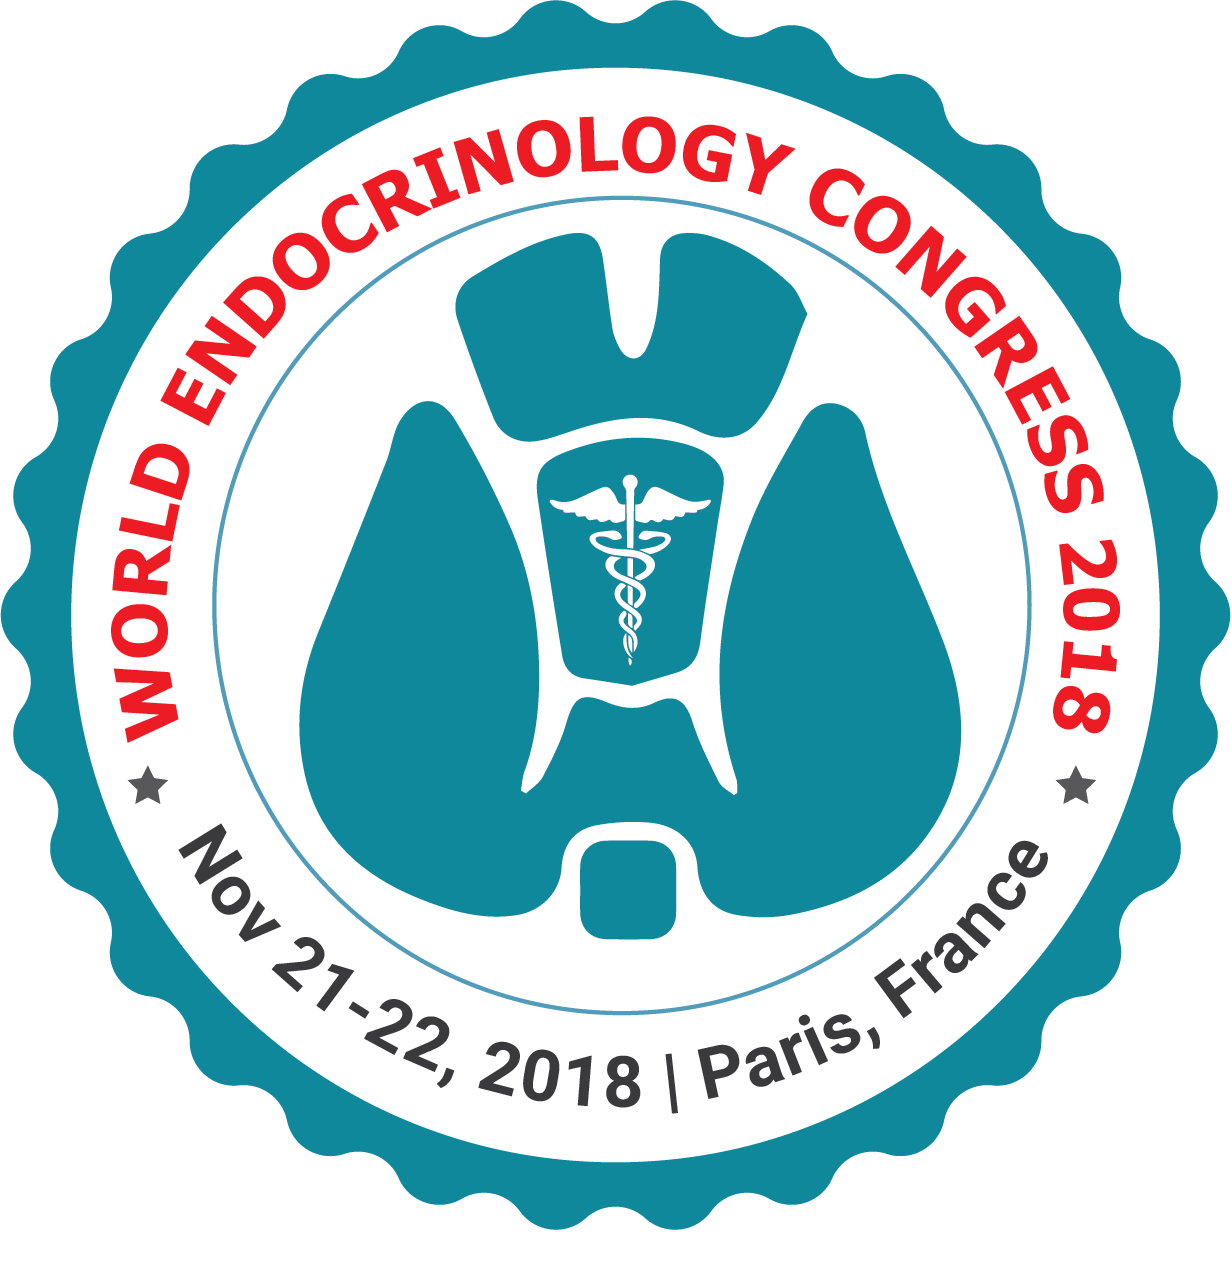 14th World Congress on  Endocrinology & Diabetes